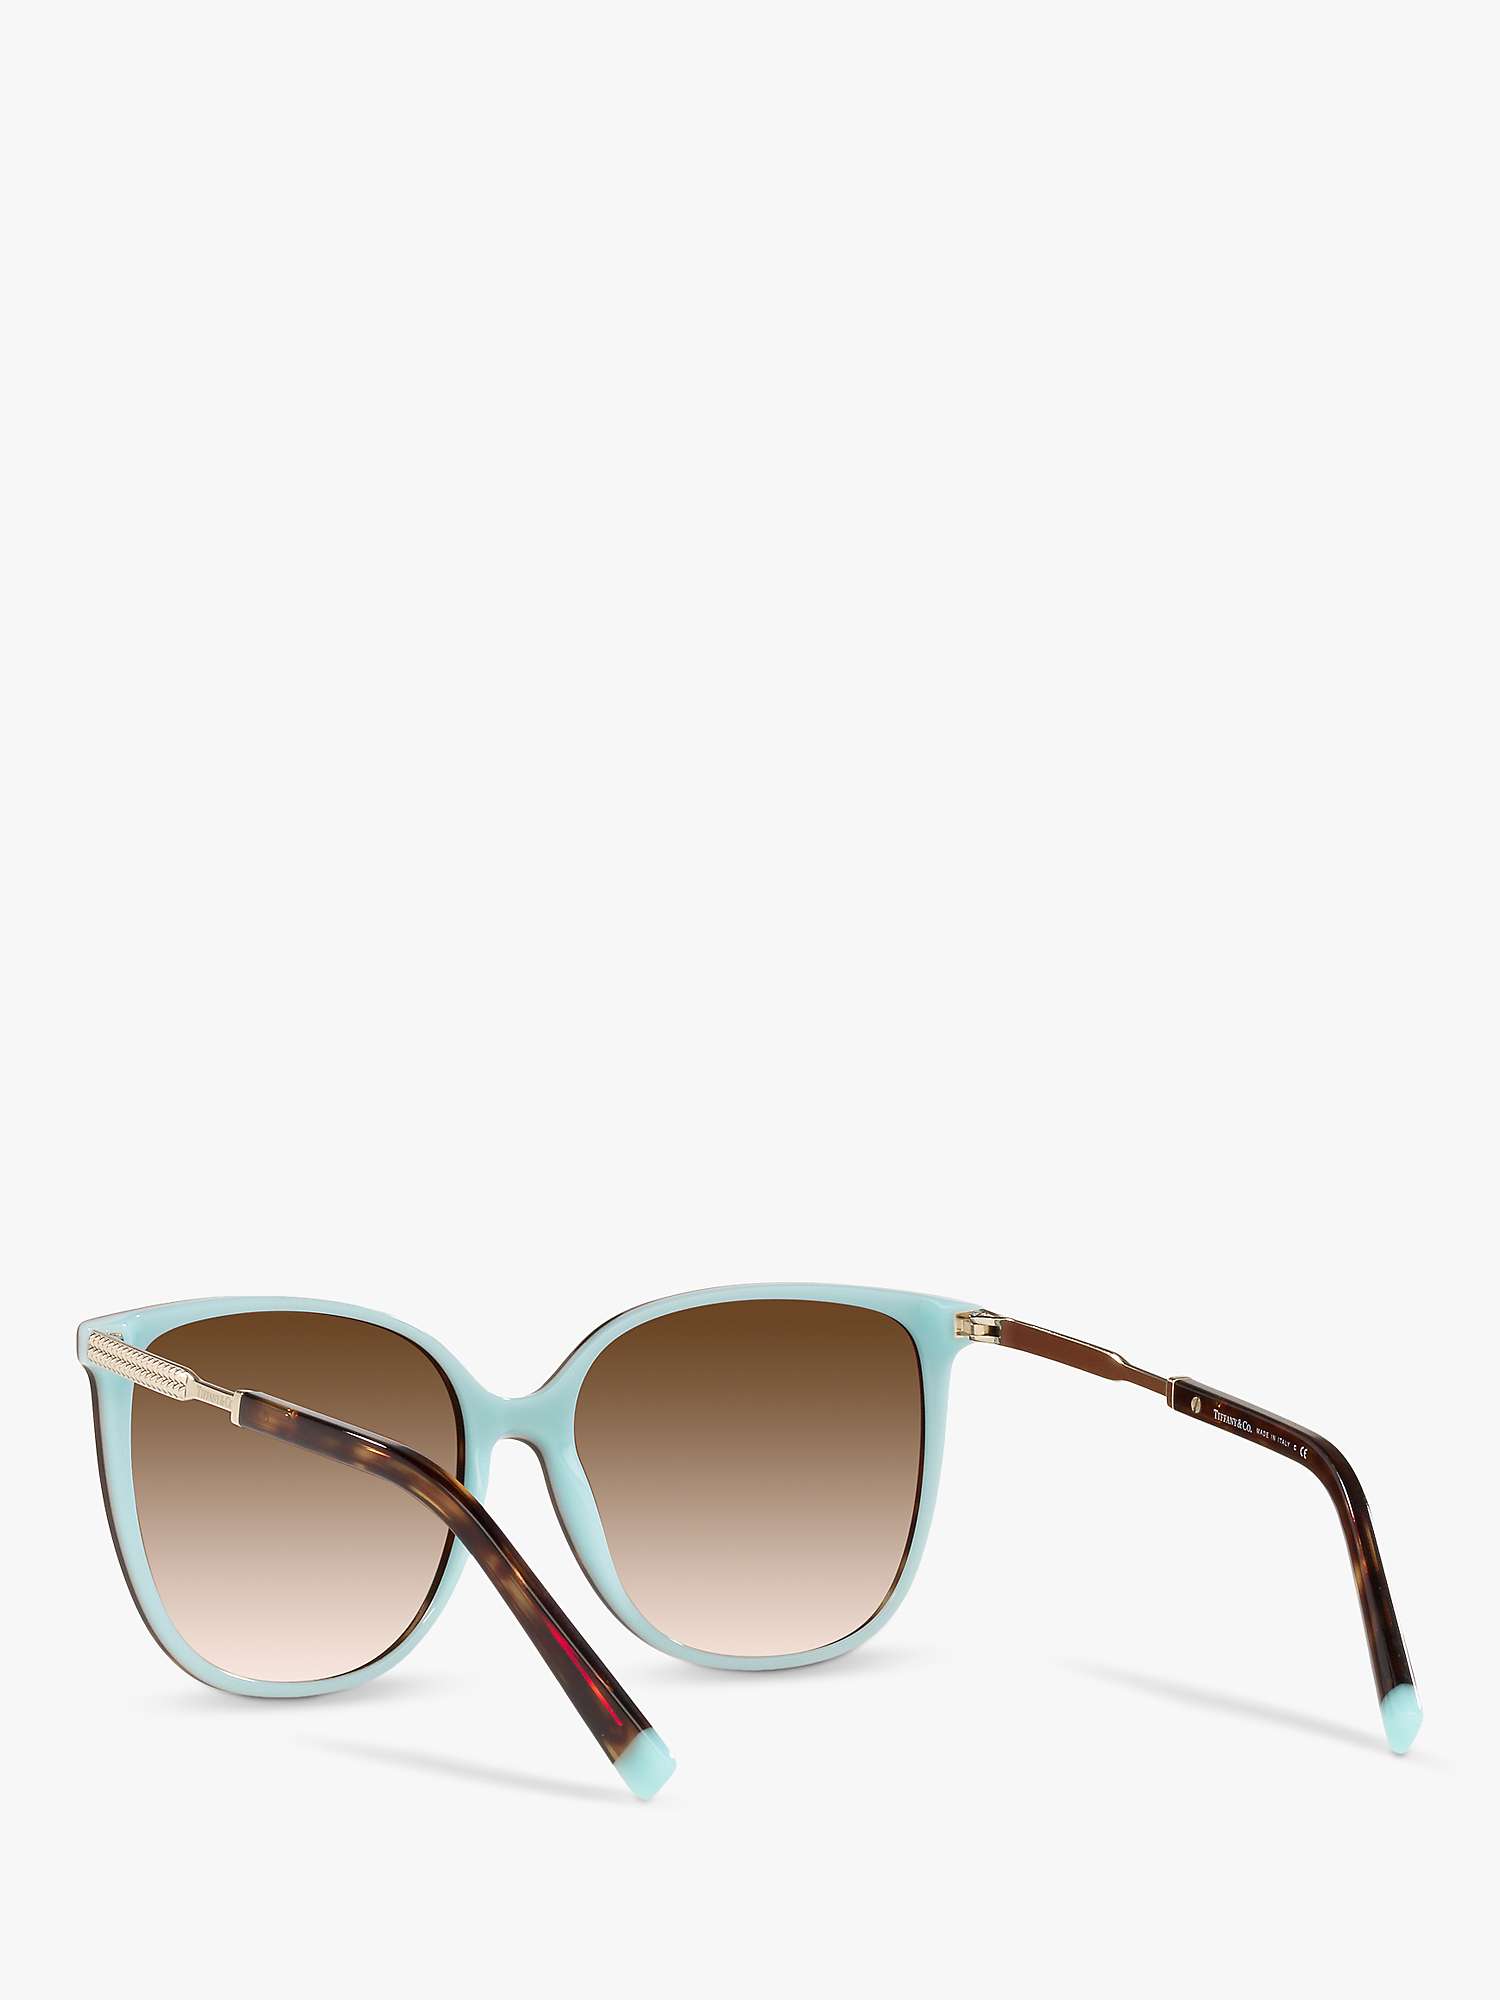 Buy Tiffany & Co TF4184 Women's Oval Sunglasses, Havana/Brown Gradient Online at johnlewis.com